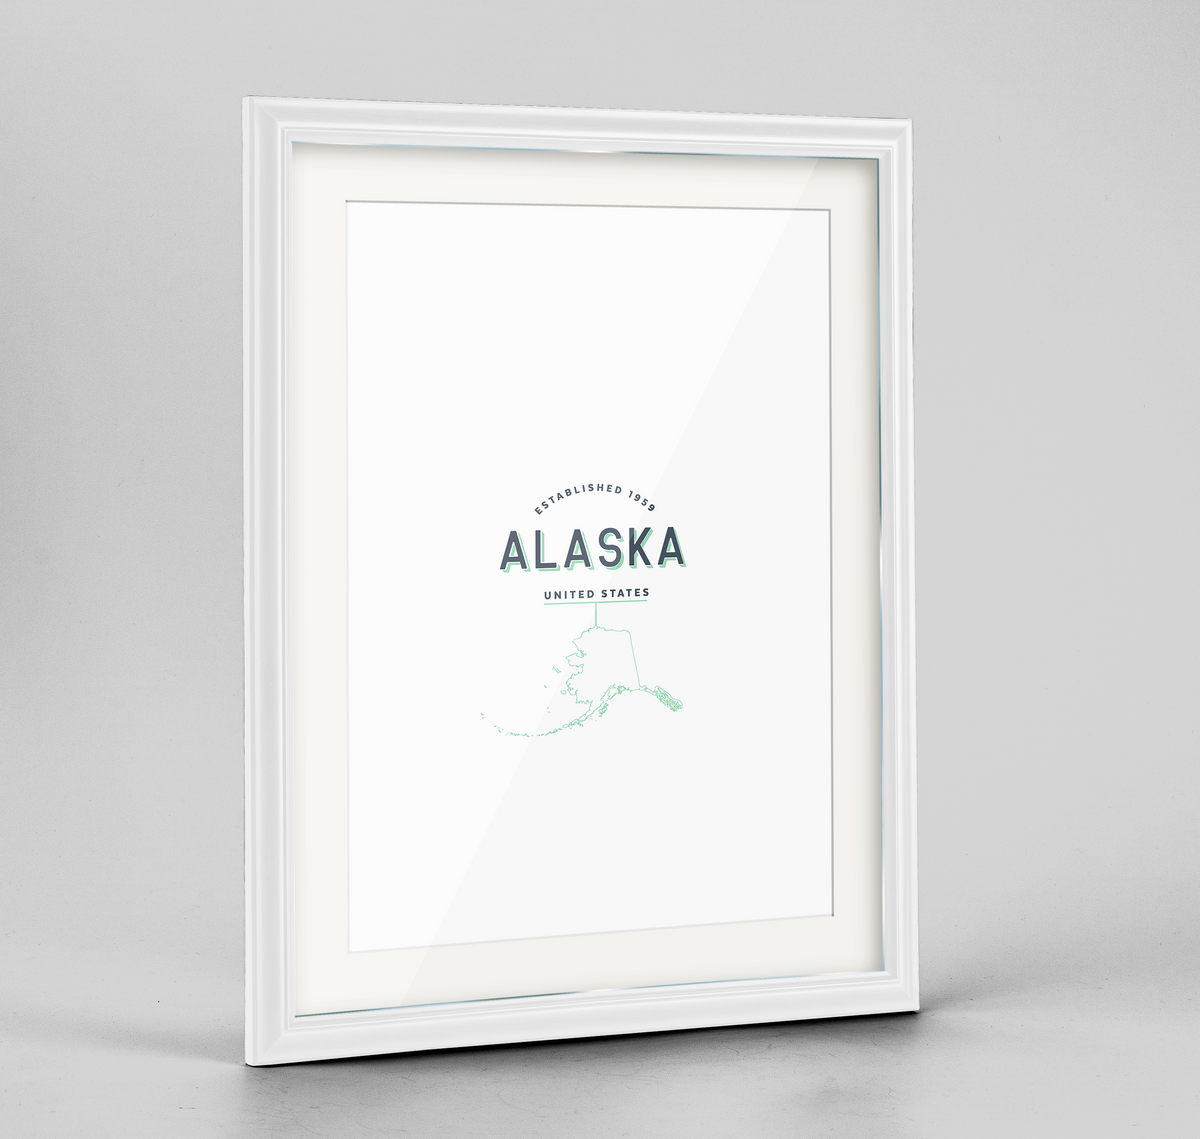 Alaska Word Art Frame Print - State Line